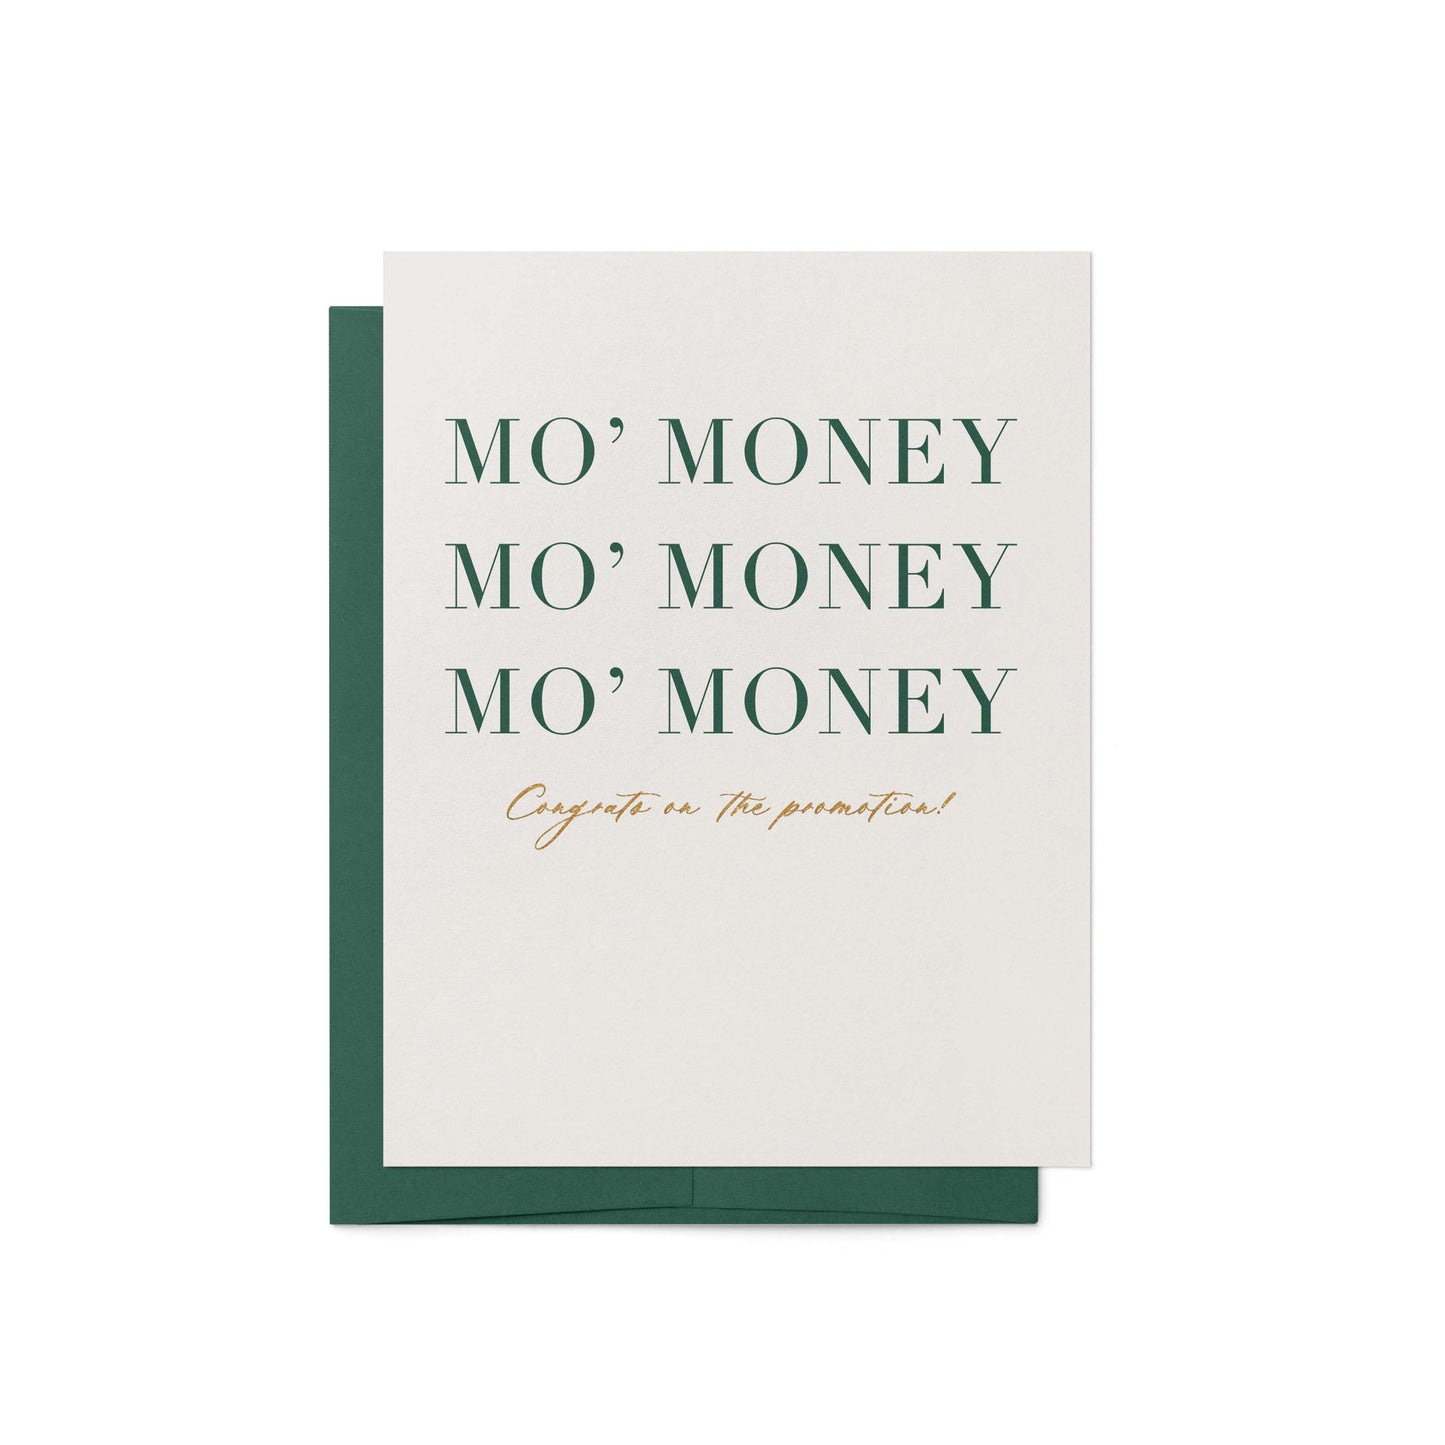 Mo' Money Promotion Card